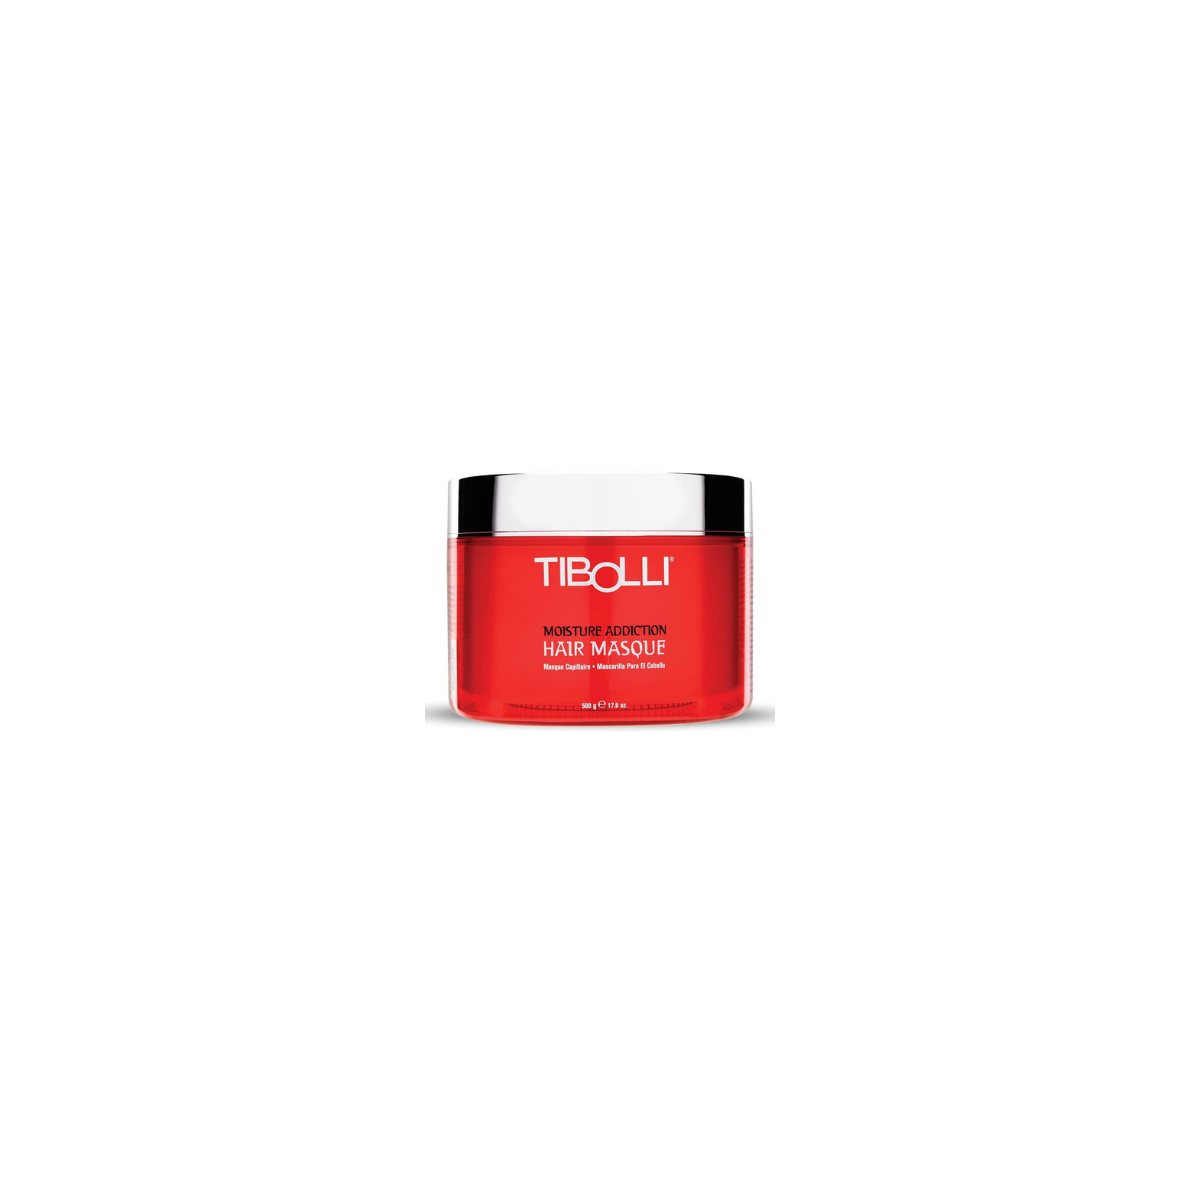 TIBOLLI - Moisture Addiction Hair Masque (500ml) Maschera idratante